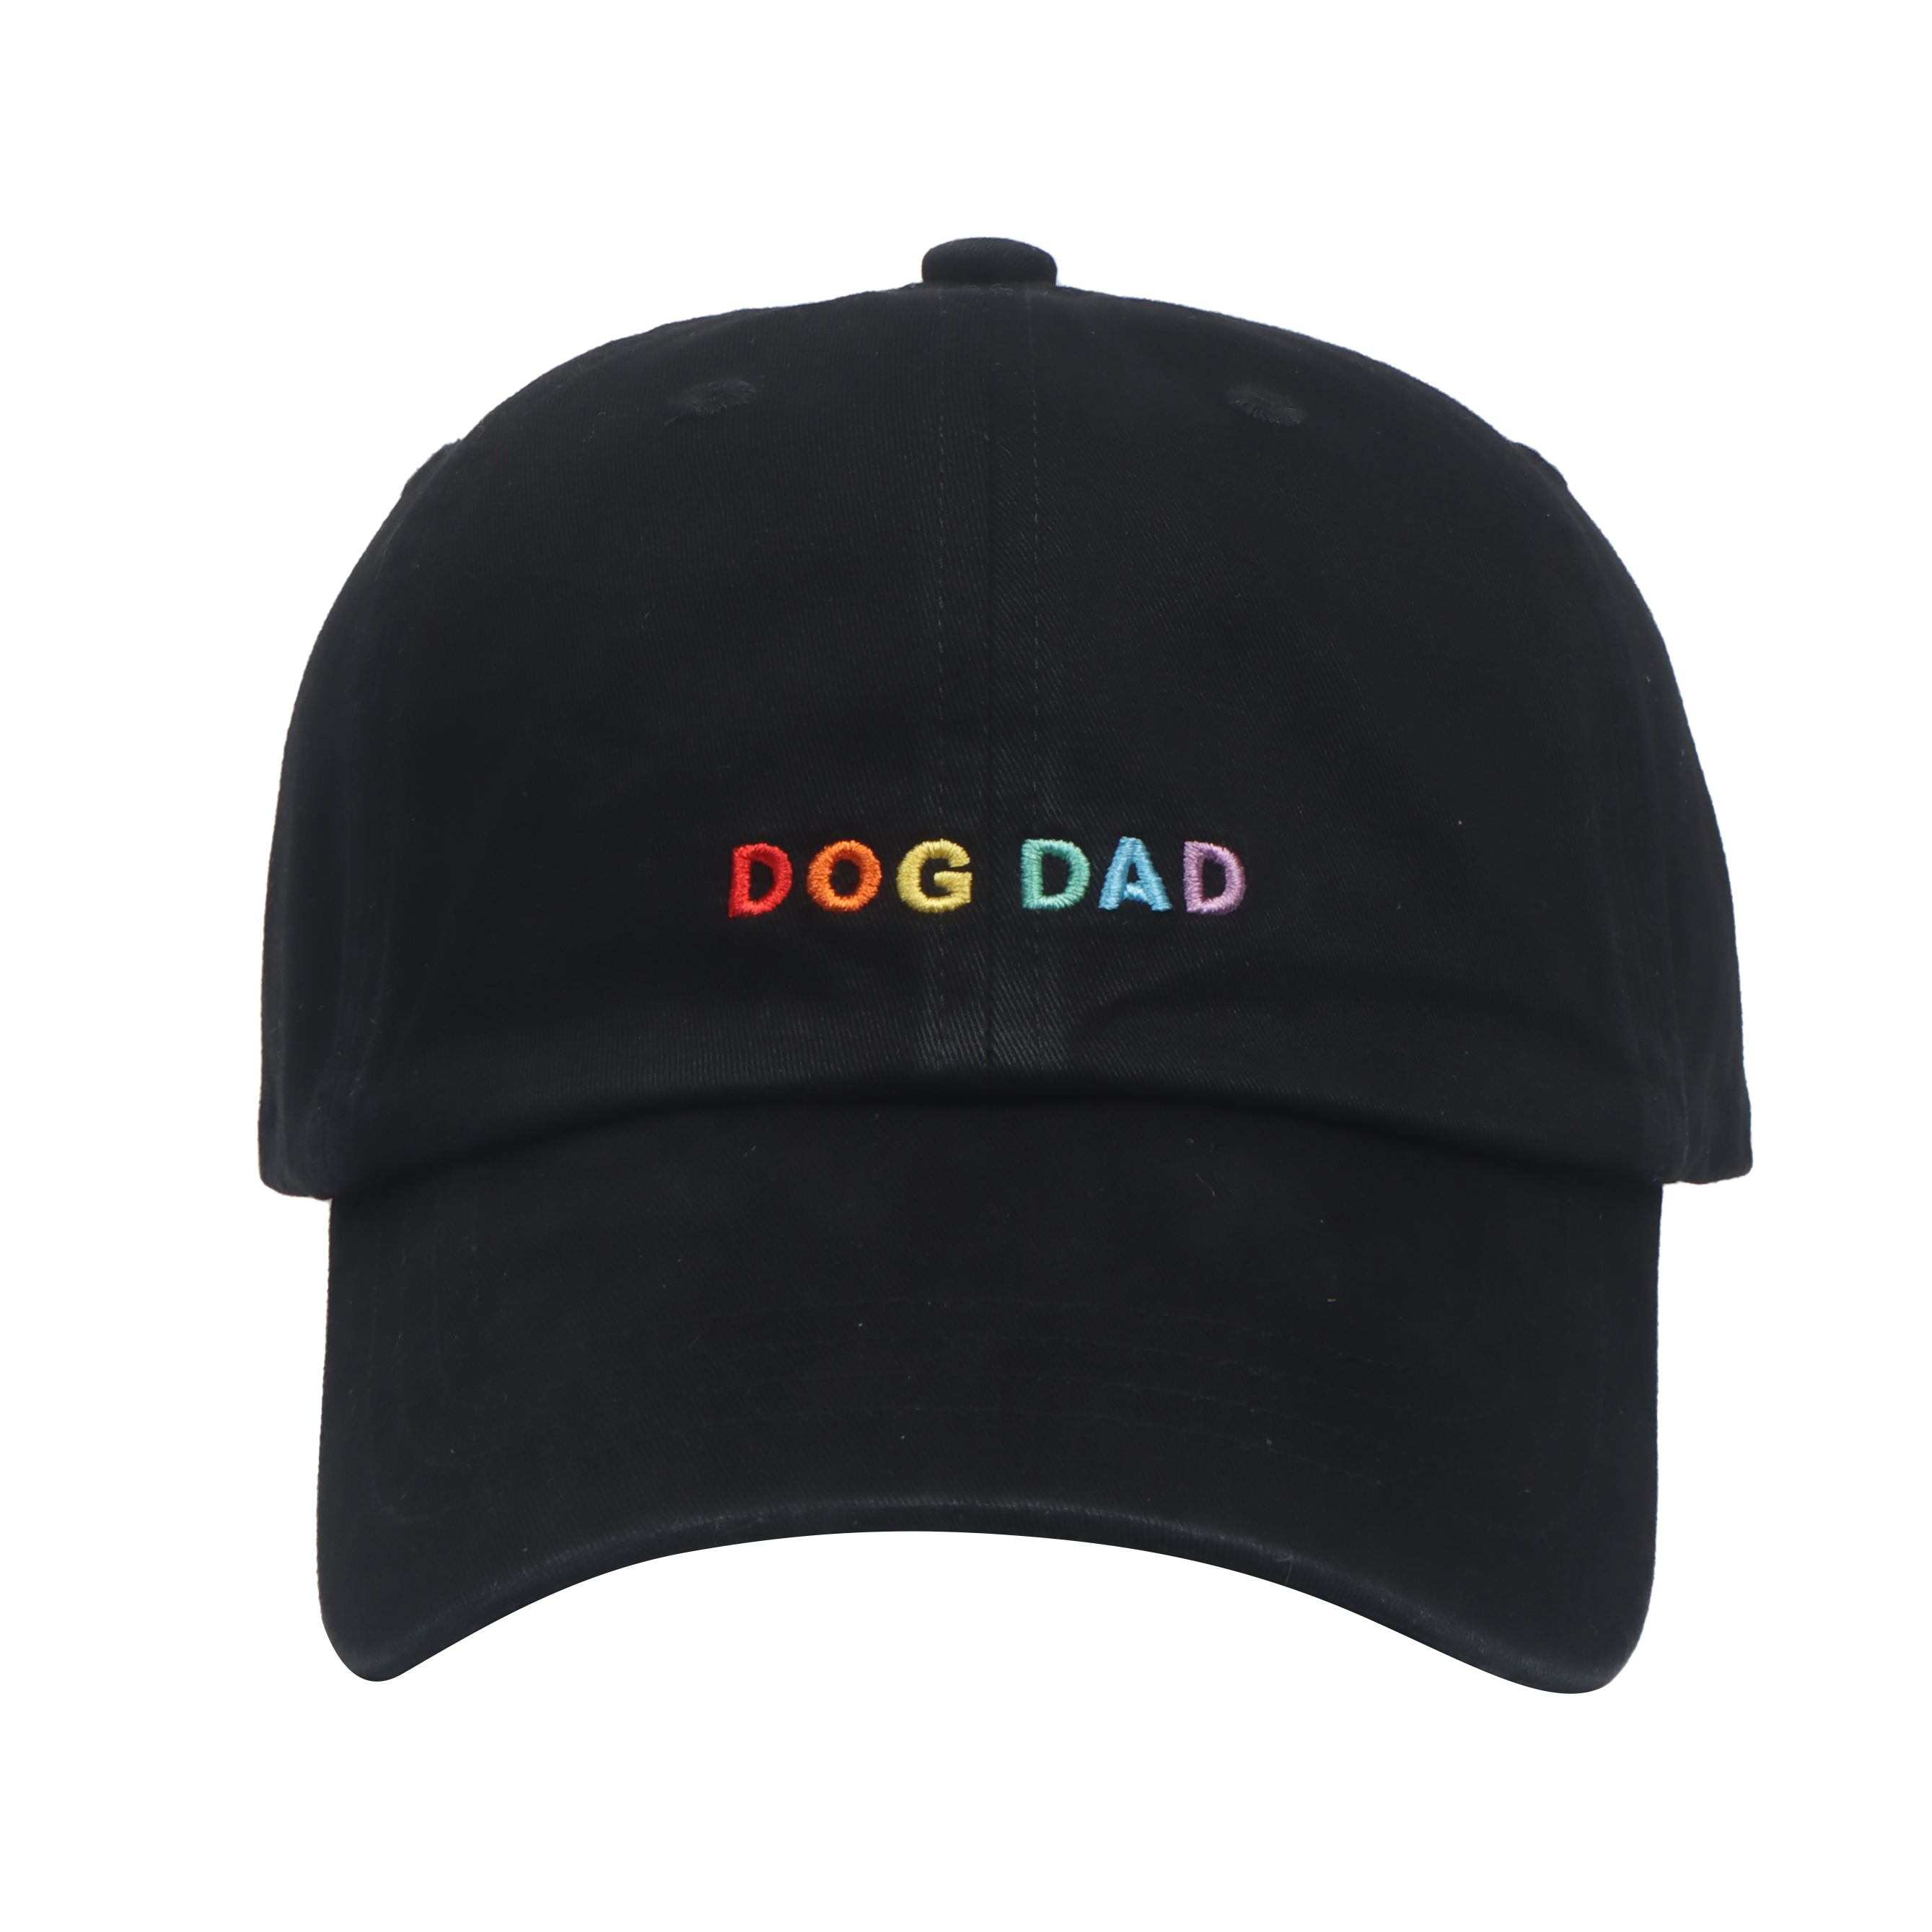 RAINBOW DOG DAD SOFT BASEBALL CAP